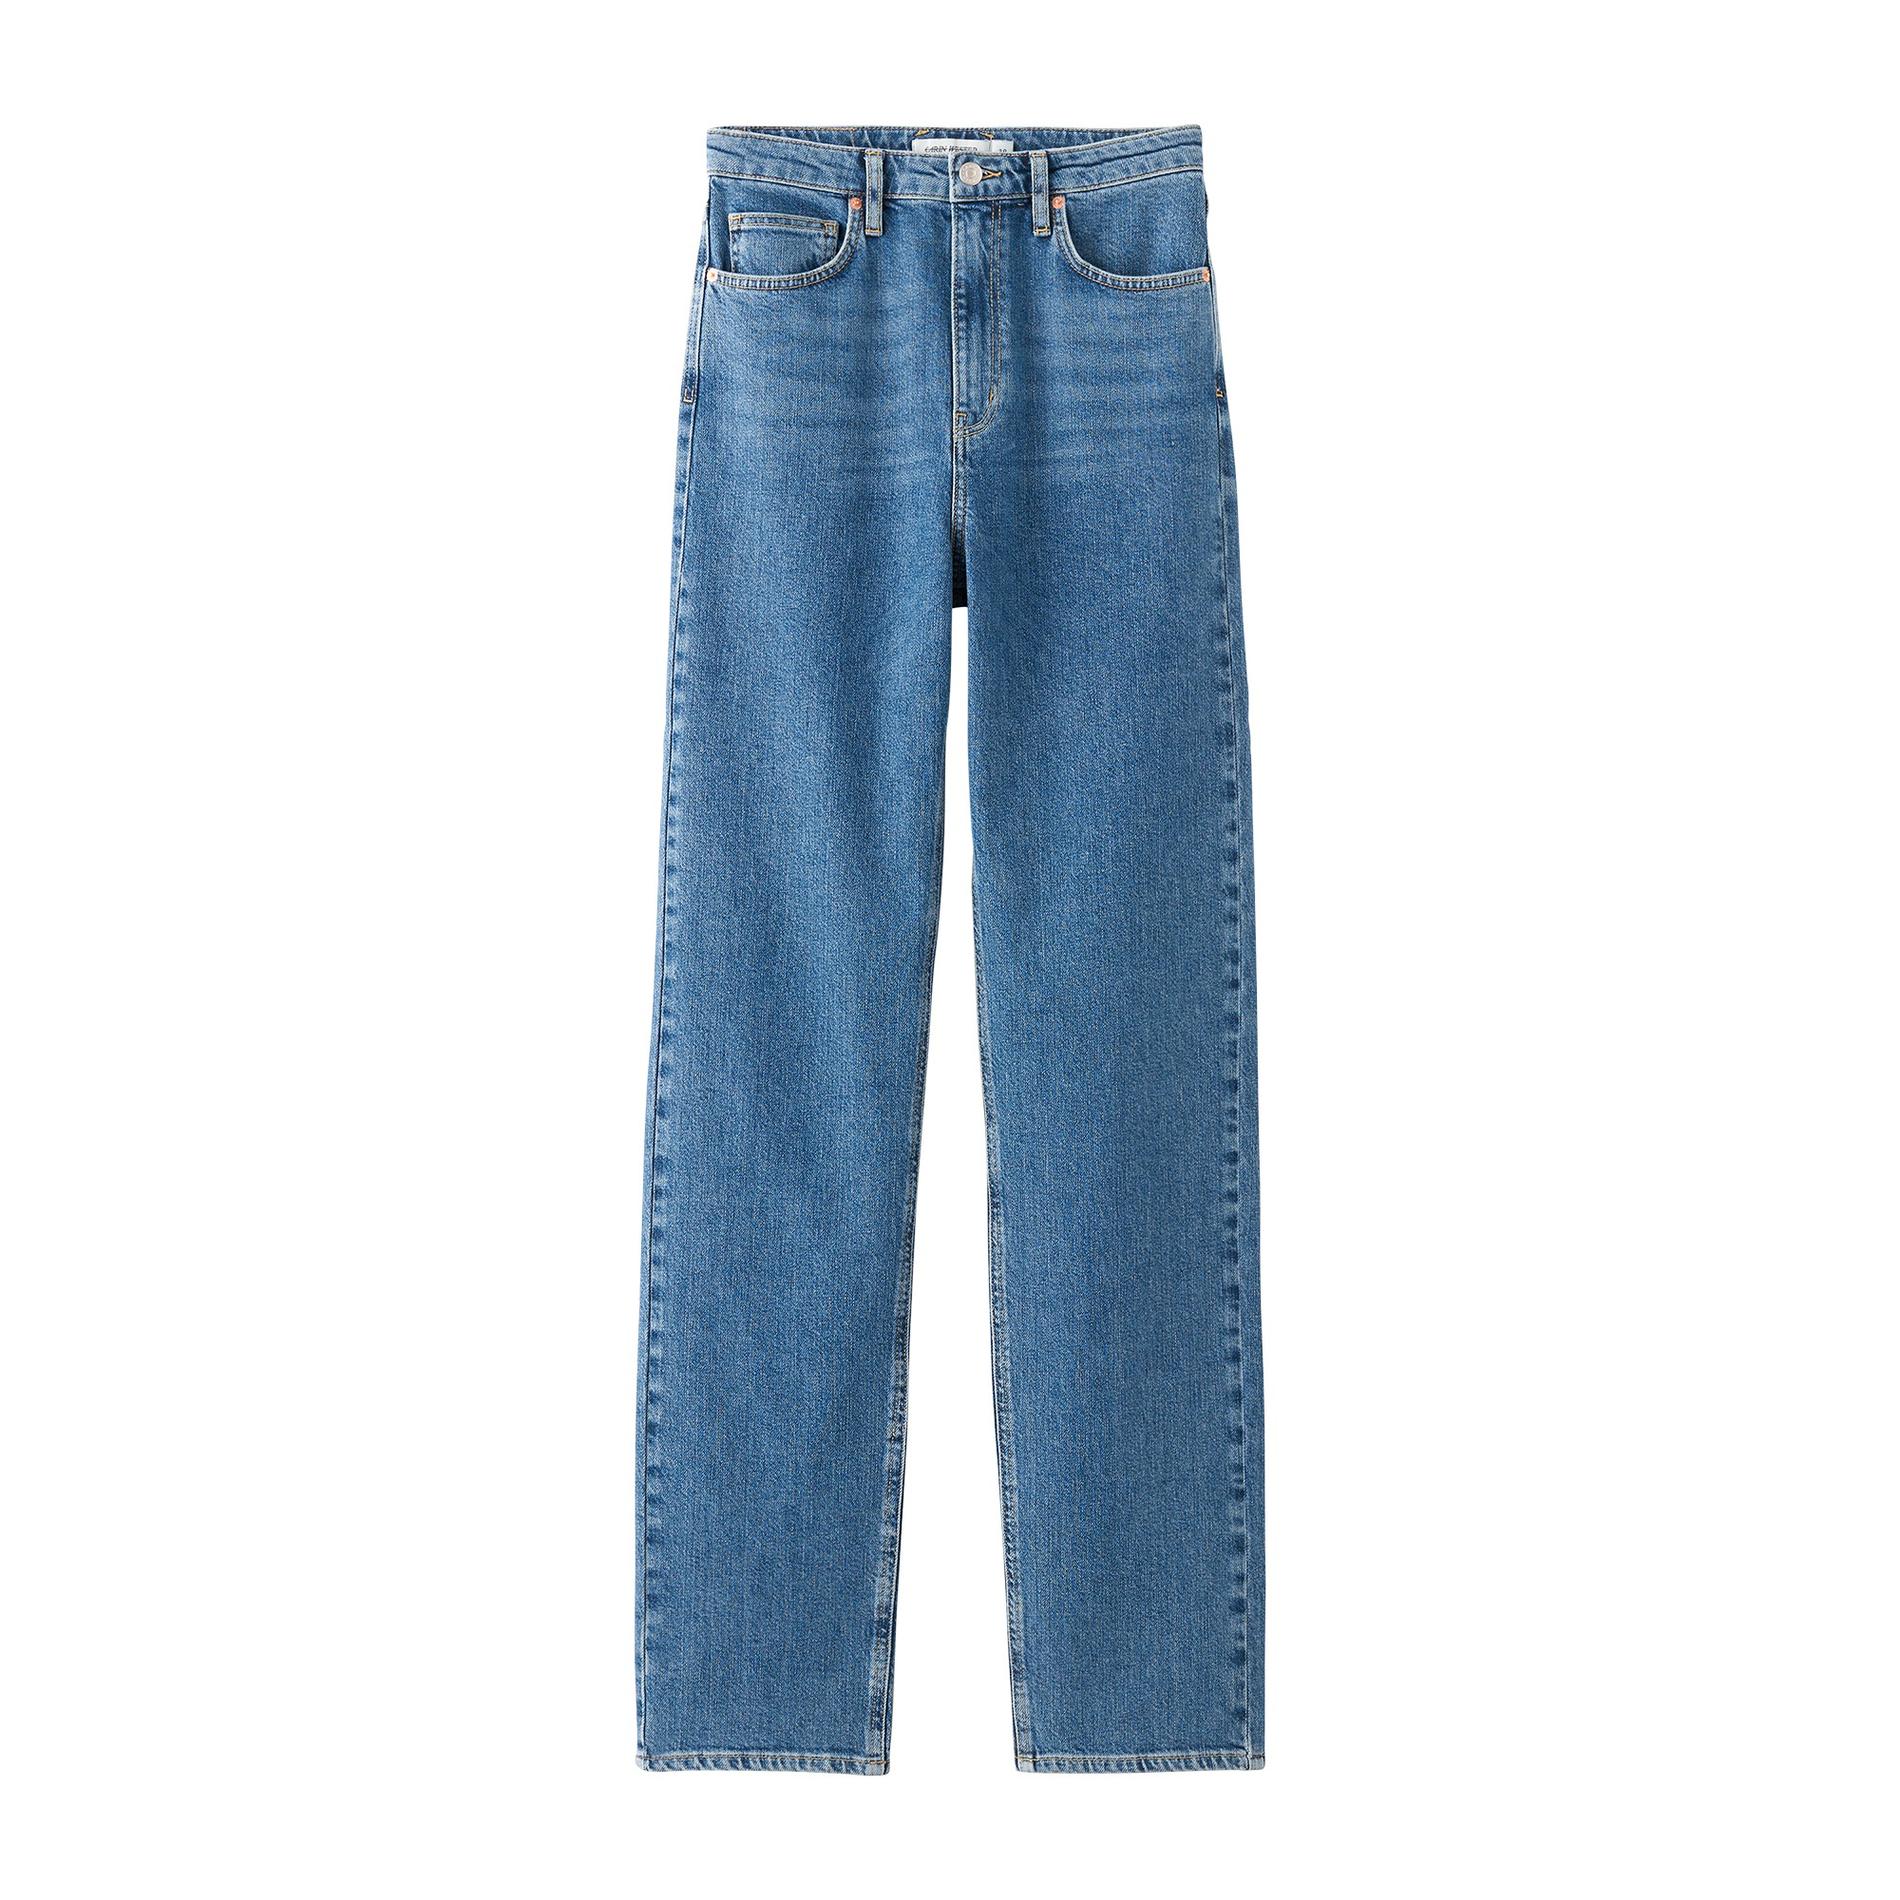 Jeans från Carin Wester